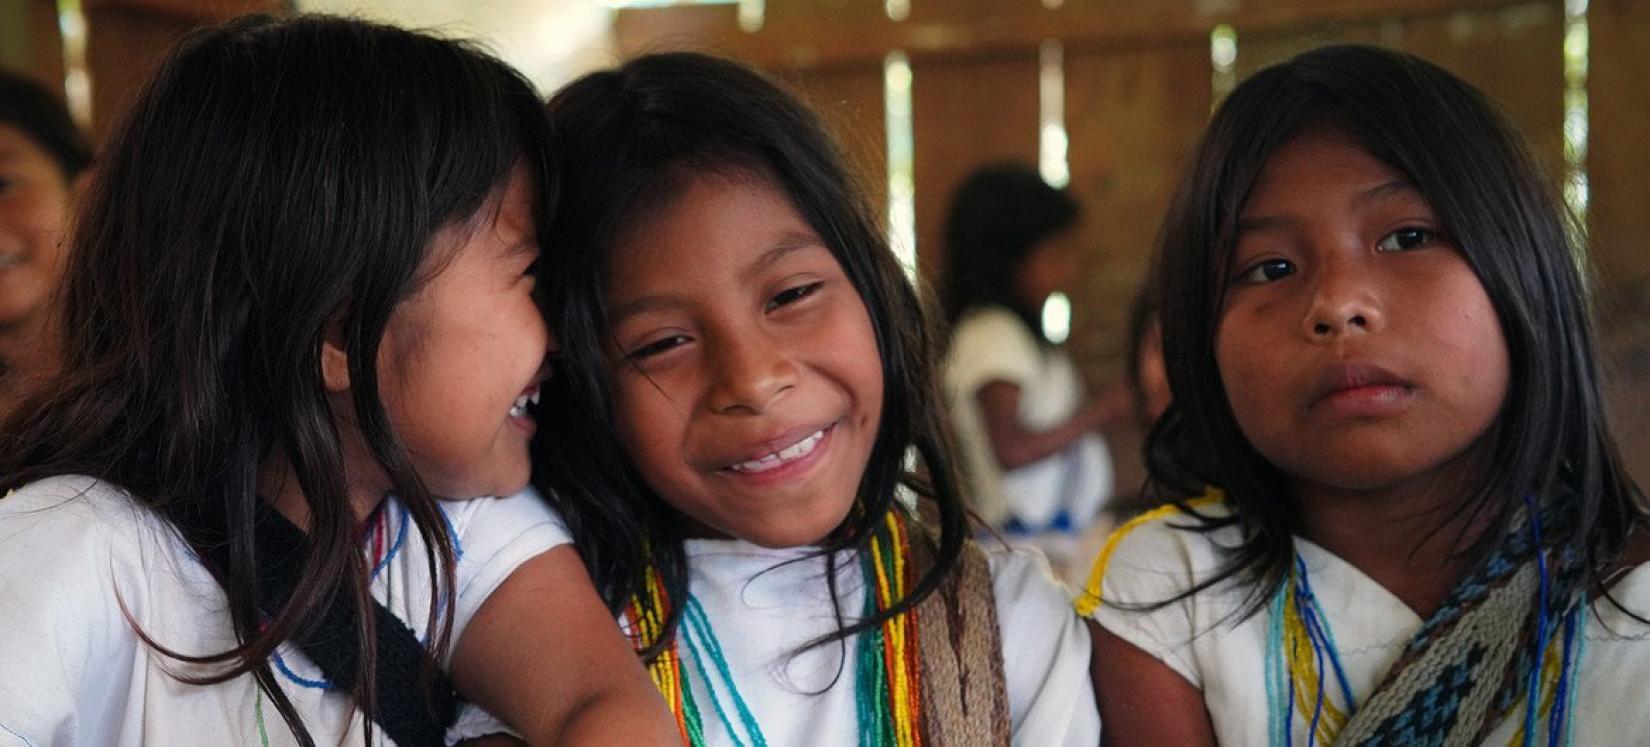 Meninas em comunidade indígena na Colômbia.